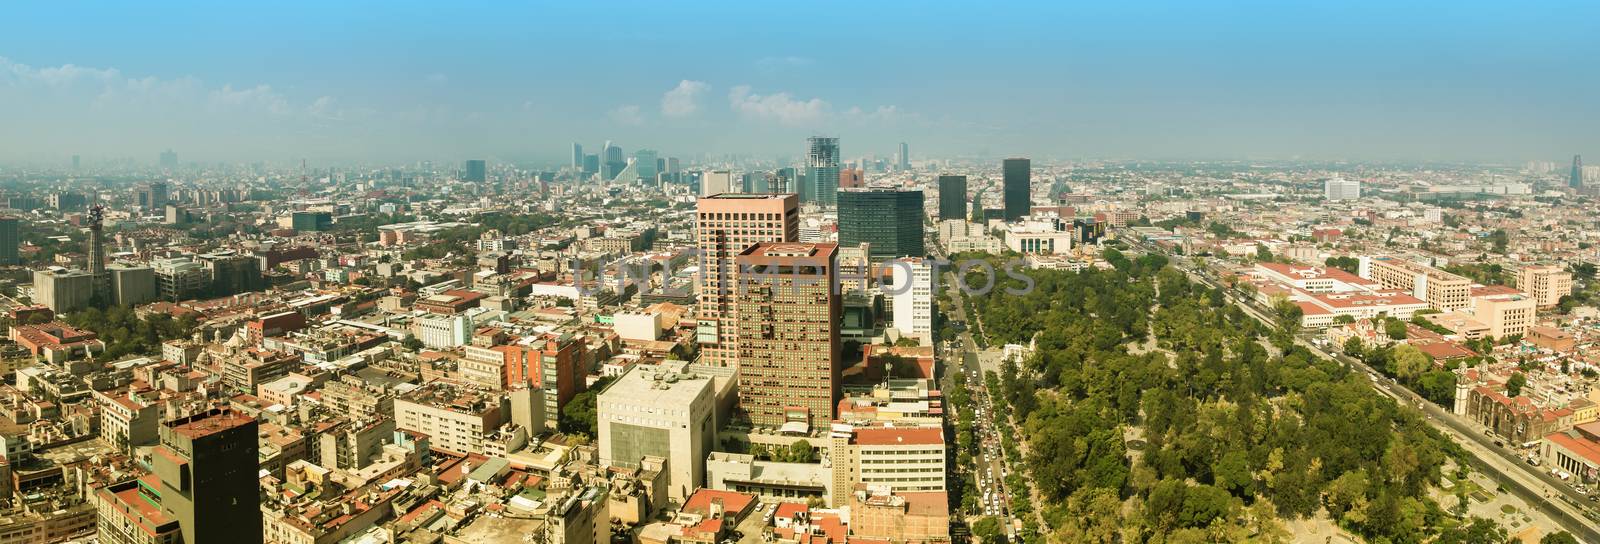 Mexico City Panorama by whitechild